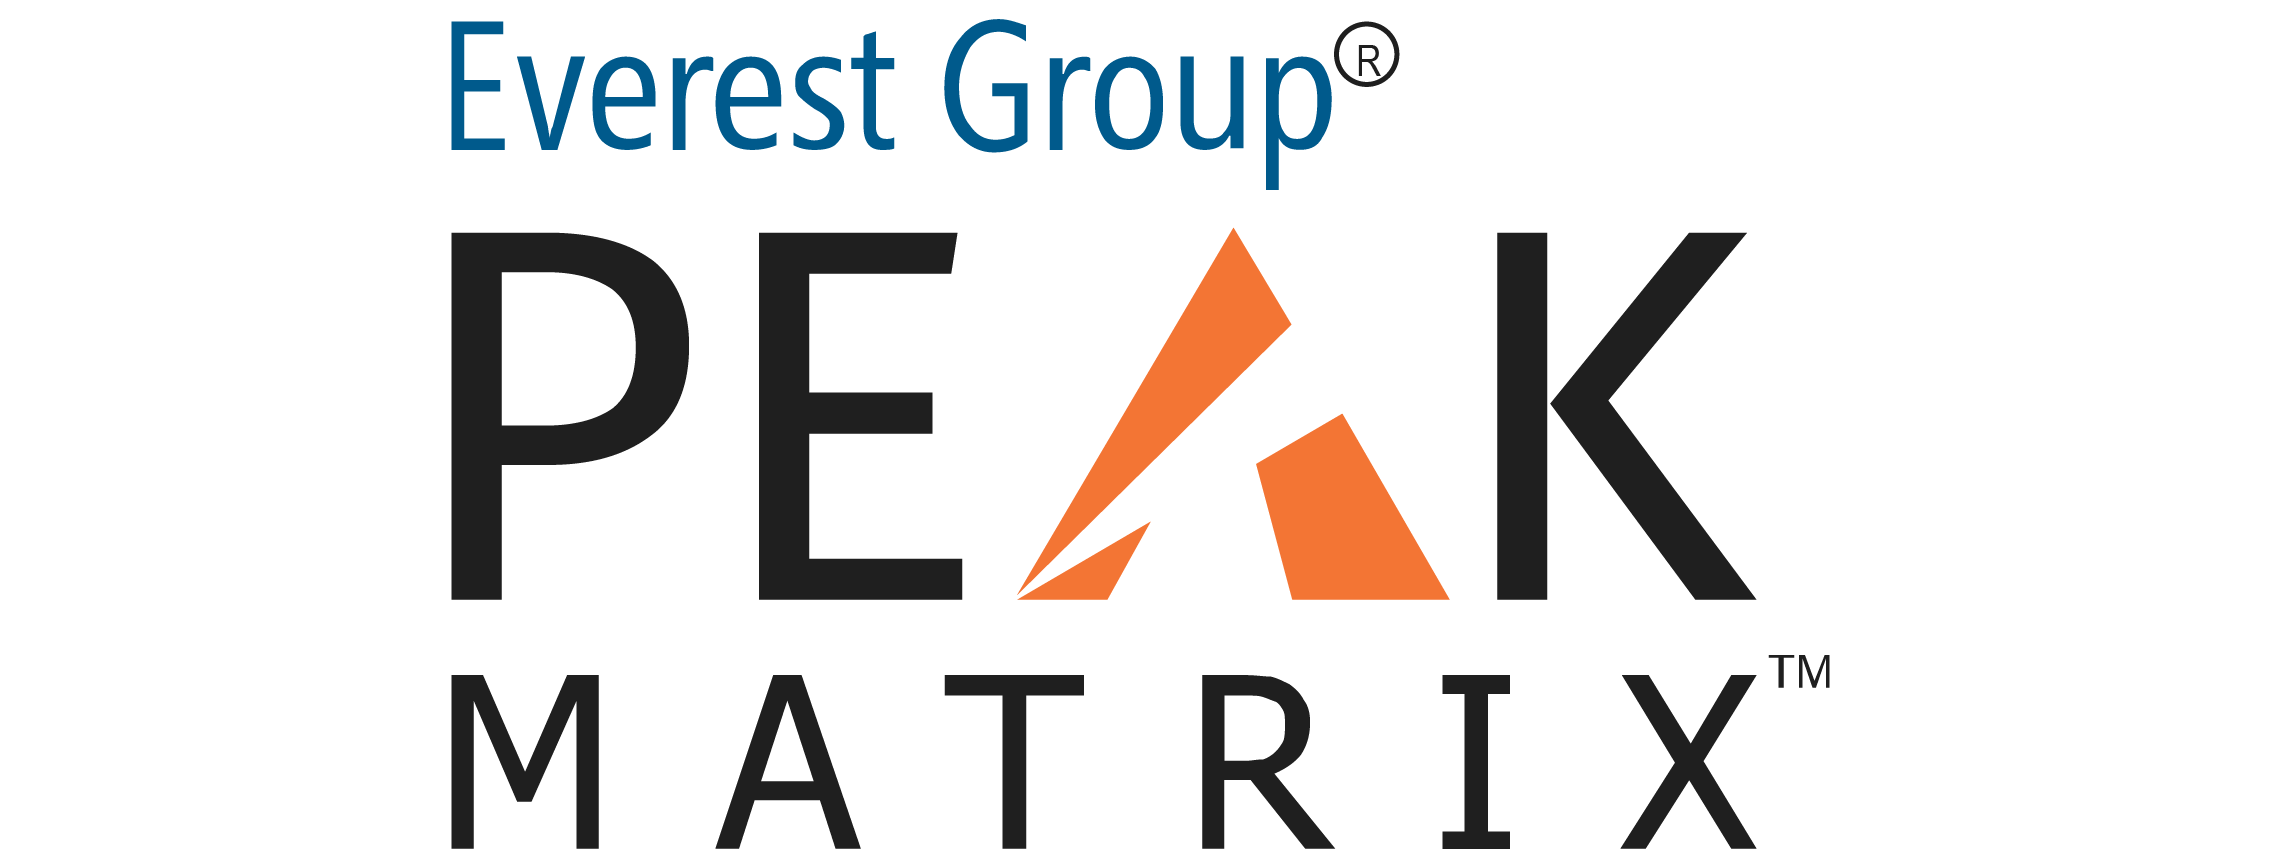 Major Contender, Everest Group Industry 4.0 Services PEAK Matrix Assessment